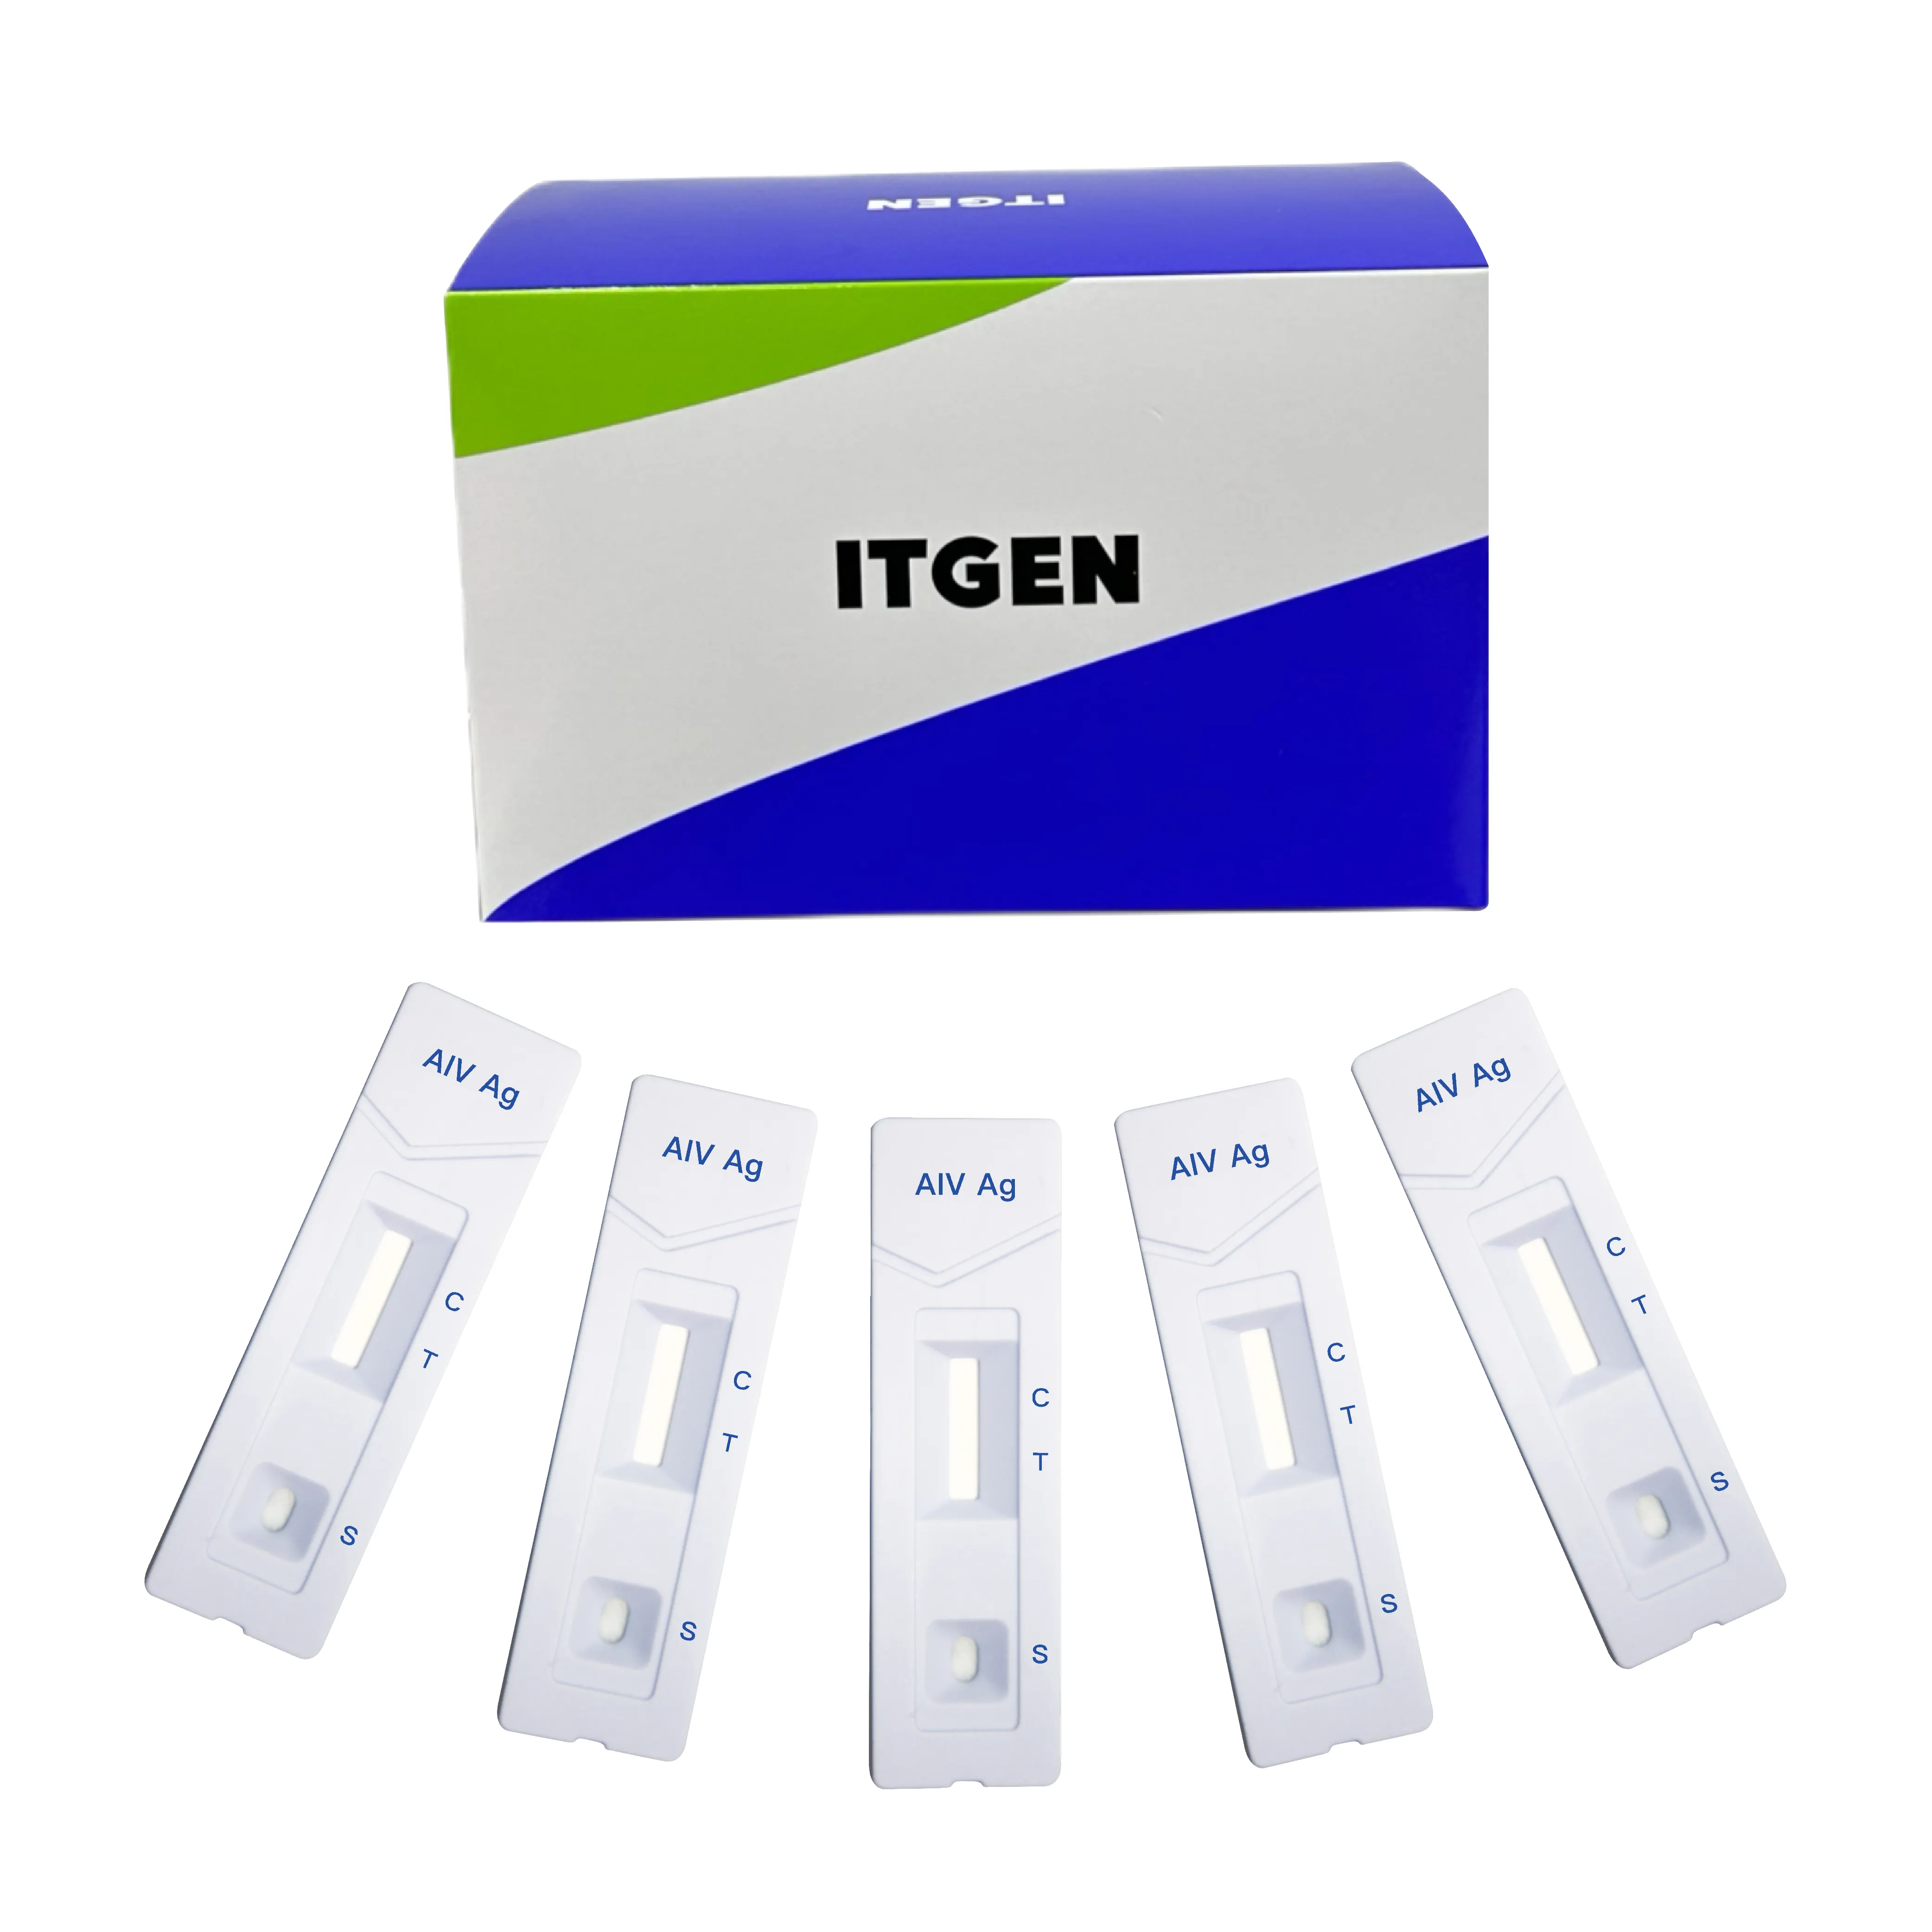 Dierenarts Aiv Antigeen Snelle Test Kaart Pluimveevirus Snelle Test H9 Aviaire Influenza Virus Aiv Antigeen Snelle Testkaart